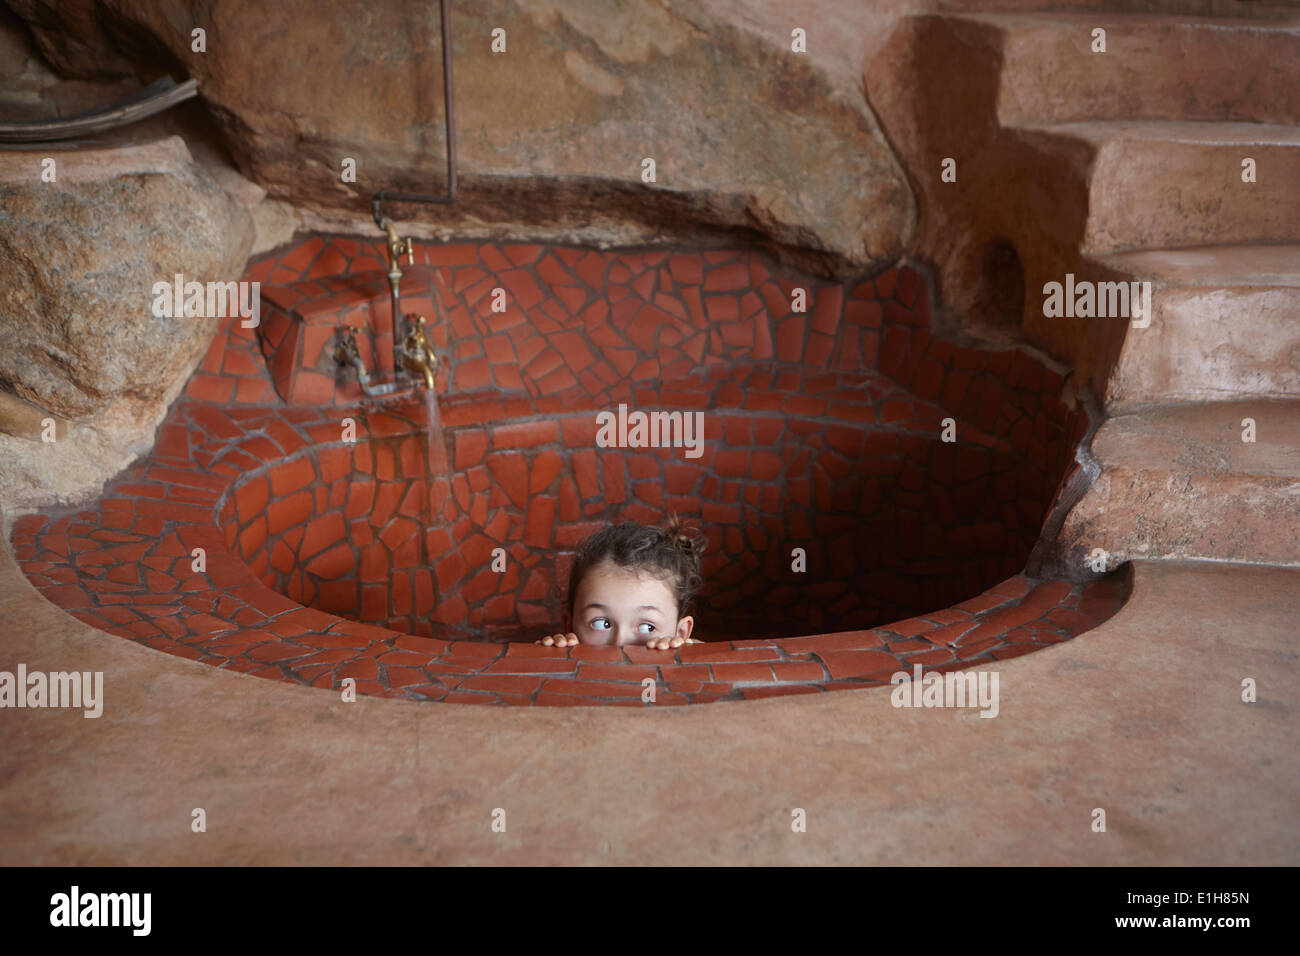 Girl peeking over rustic bath in floor Stock Photo